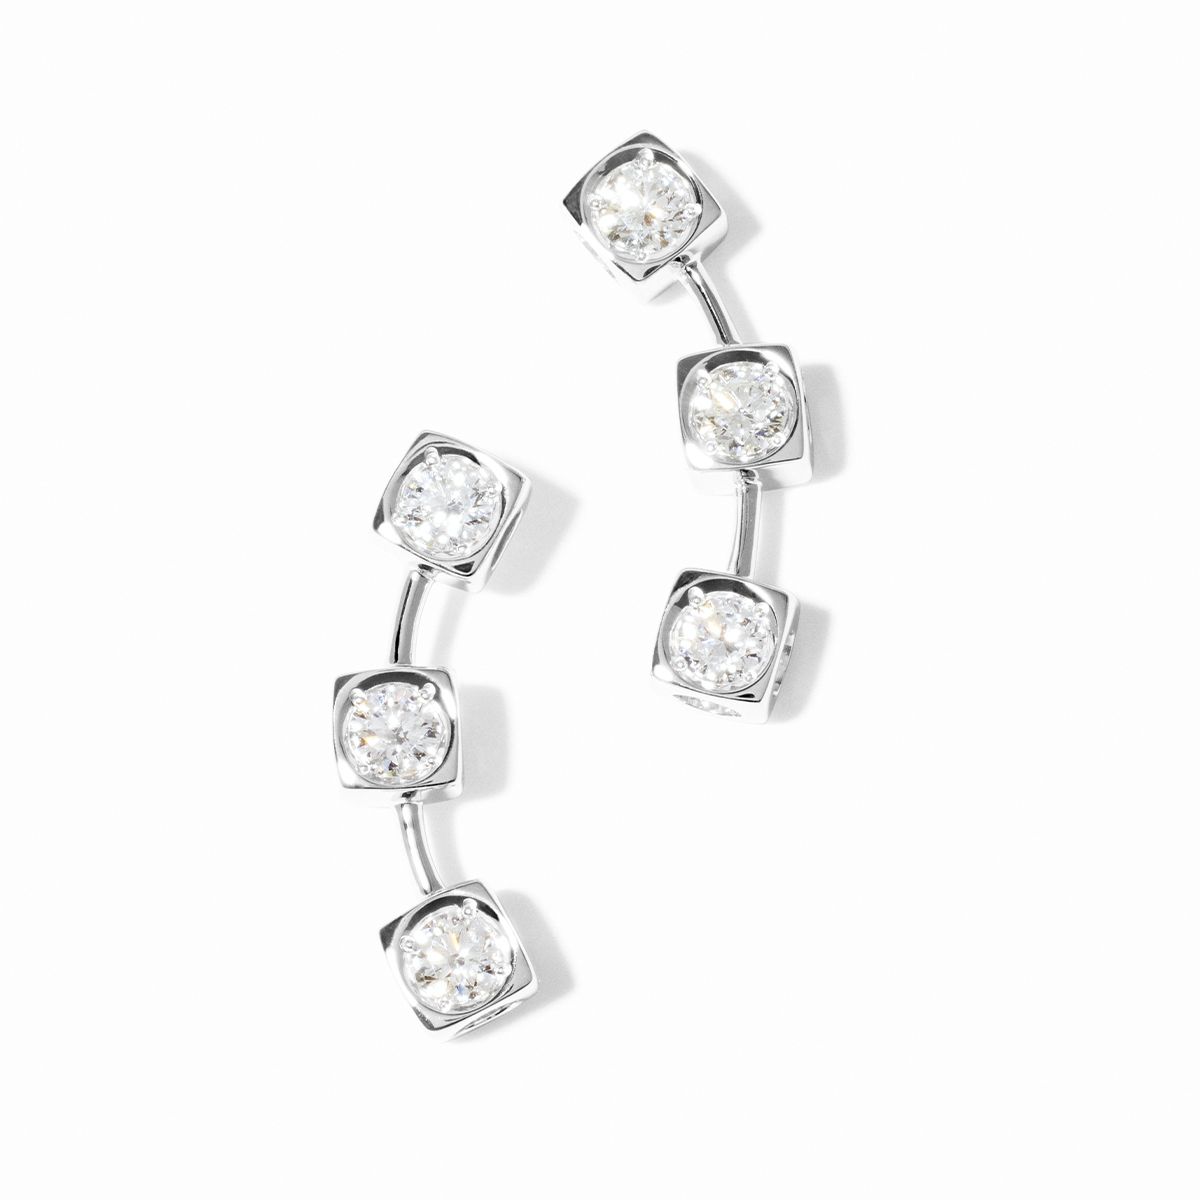 Le Cube Diamant earrings